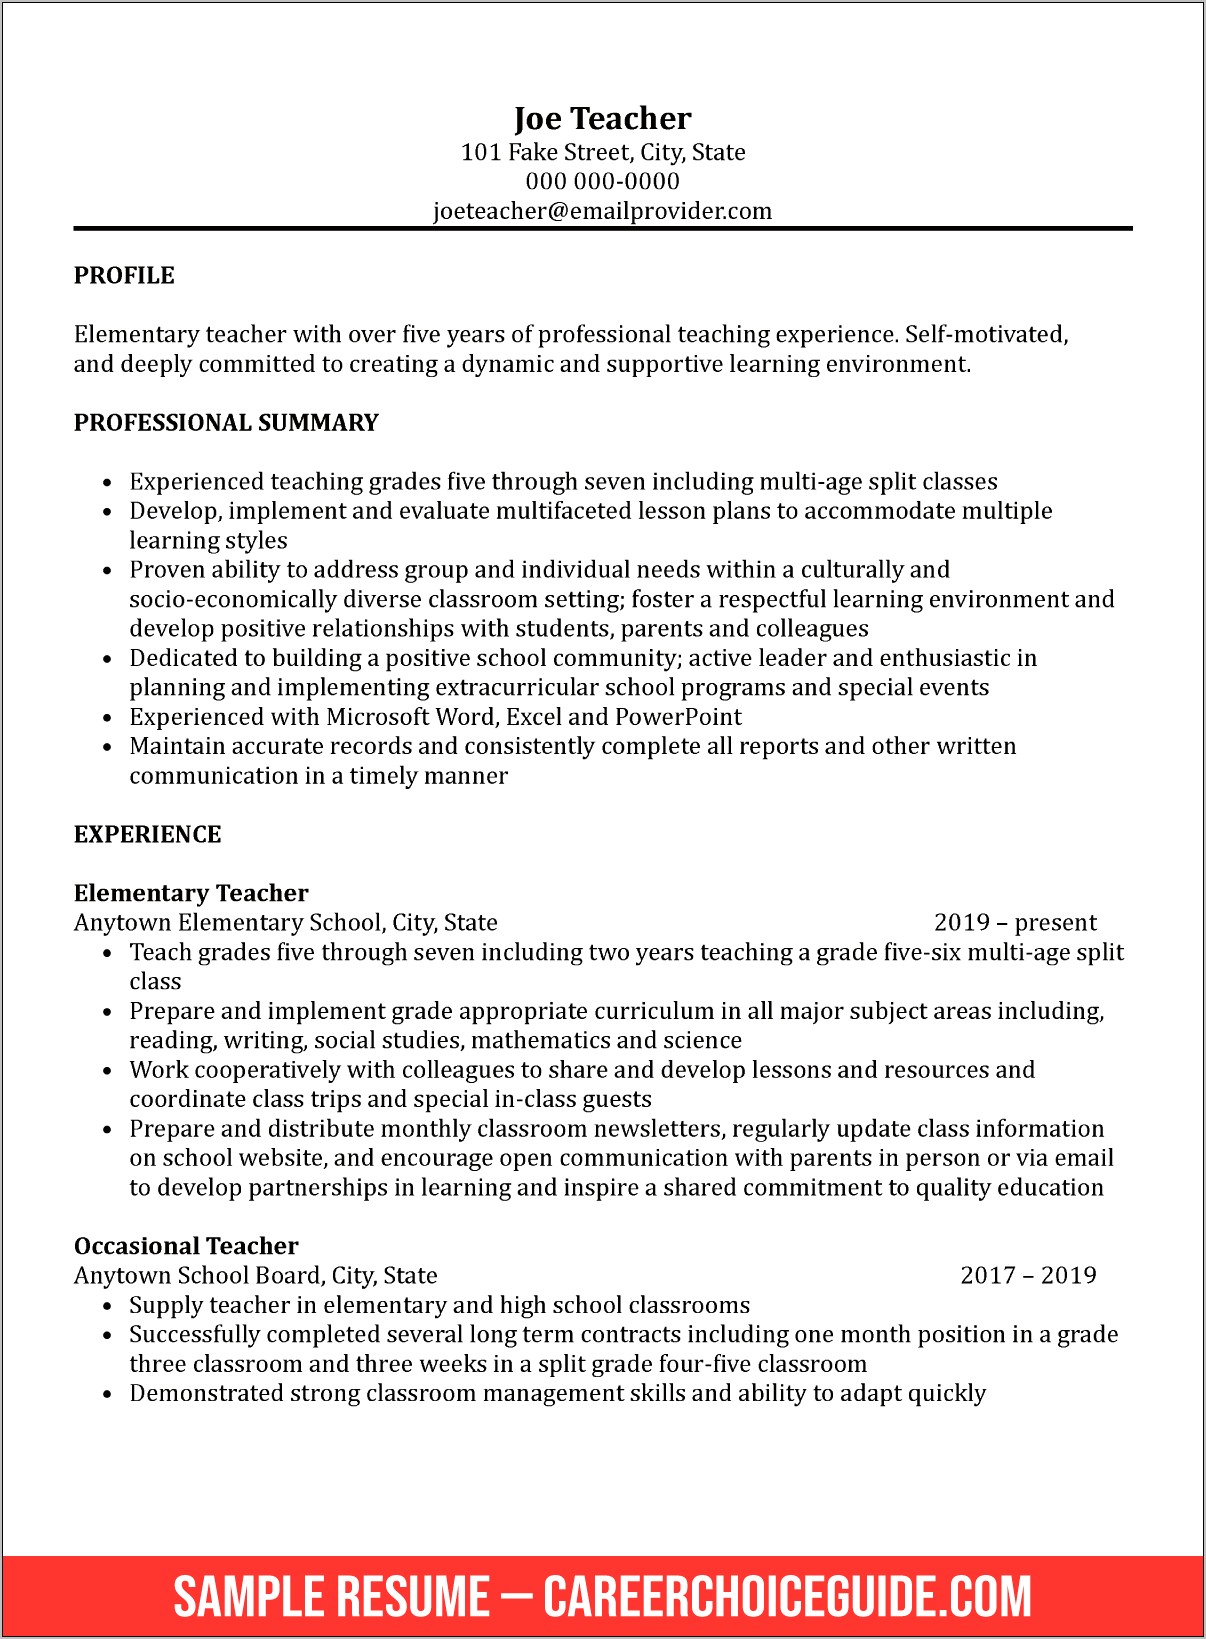 Resume Profile Example For Teachers